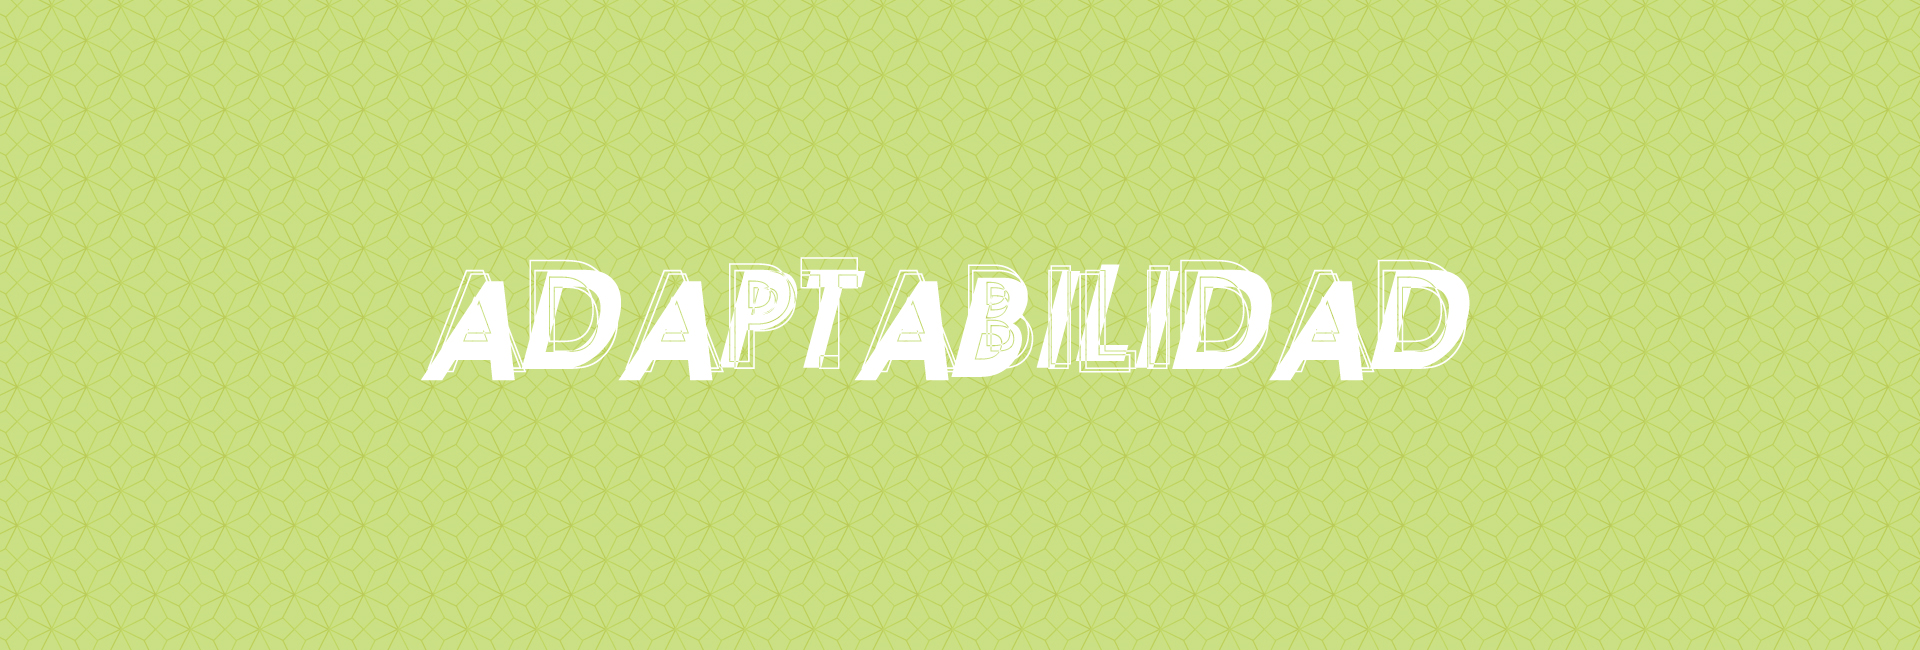 Adaptabilidad_OK_2